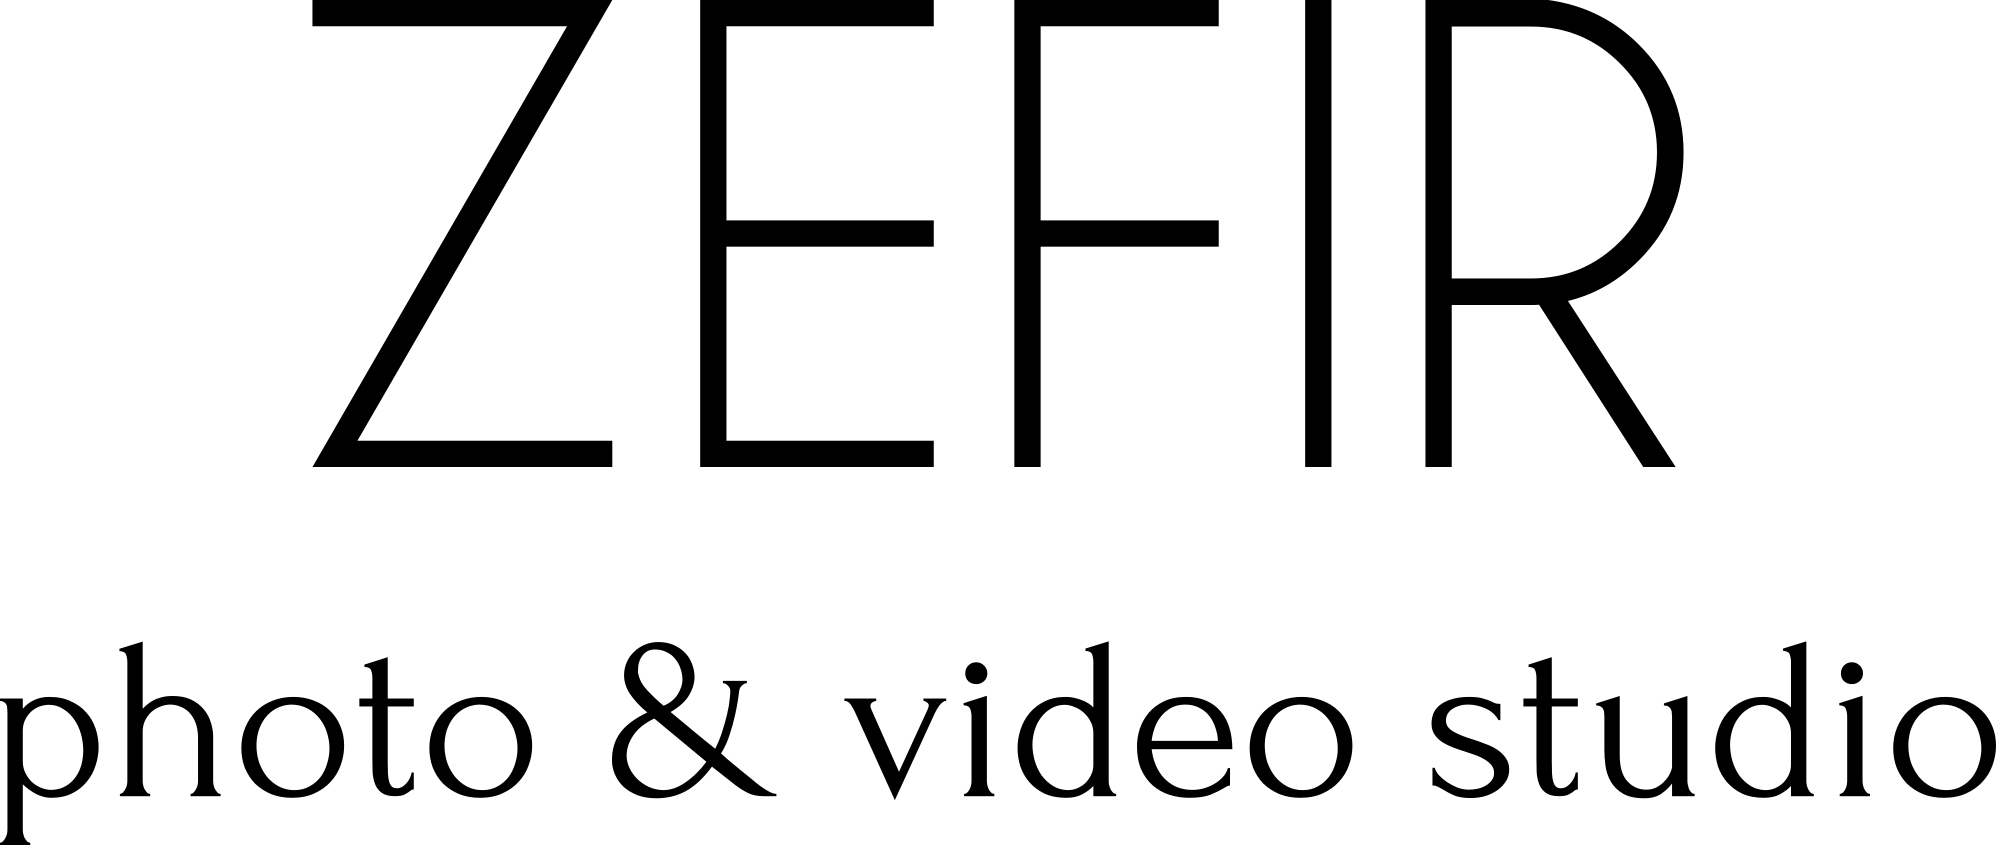 Zefir logo z napisem photo & video studio czarne litery